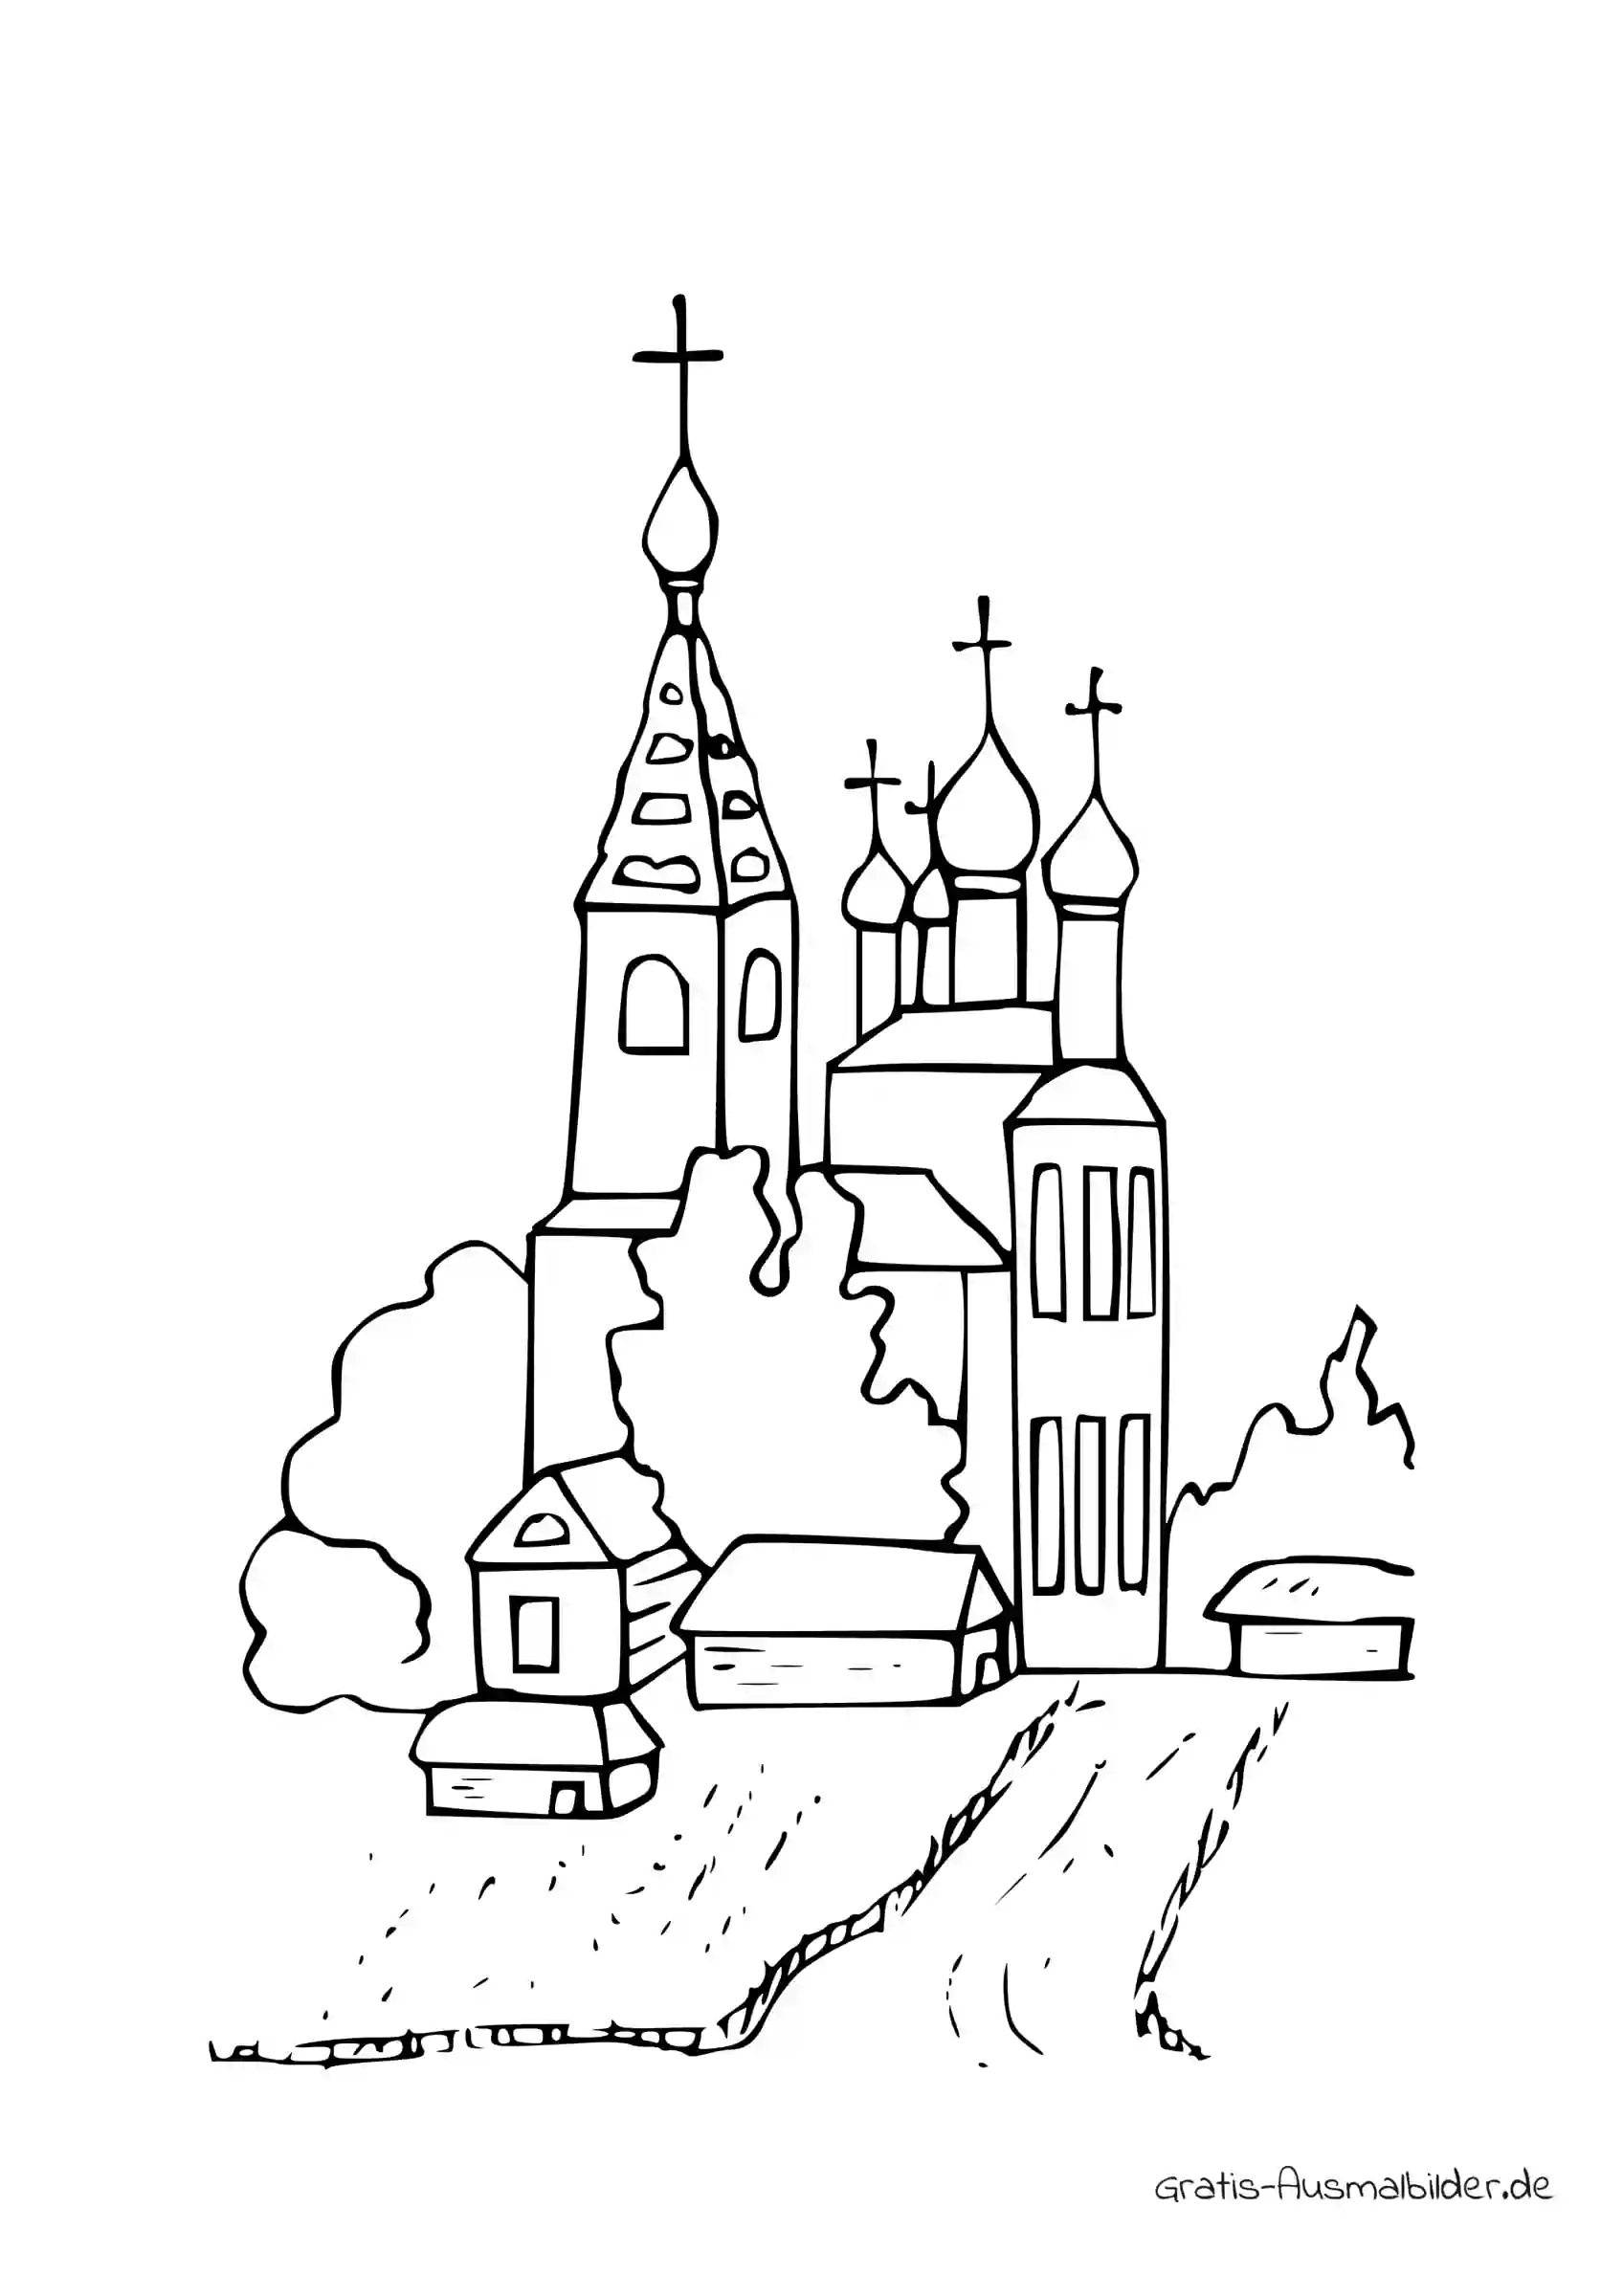 Ausmalbild Kirche mit vielen Türmen